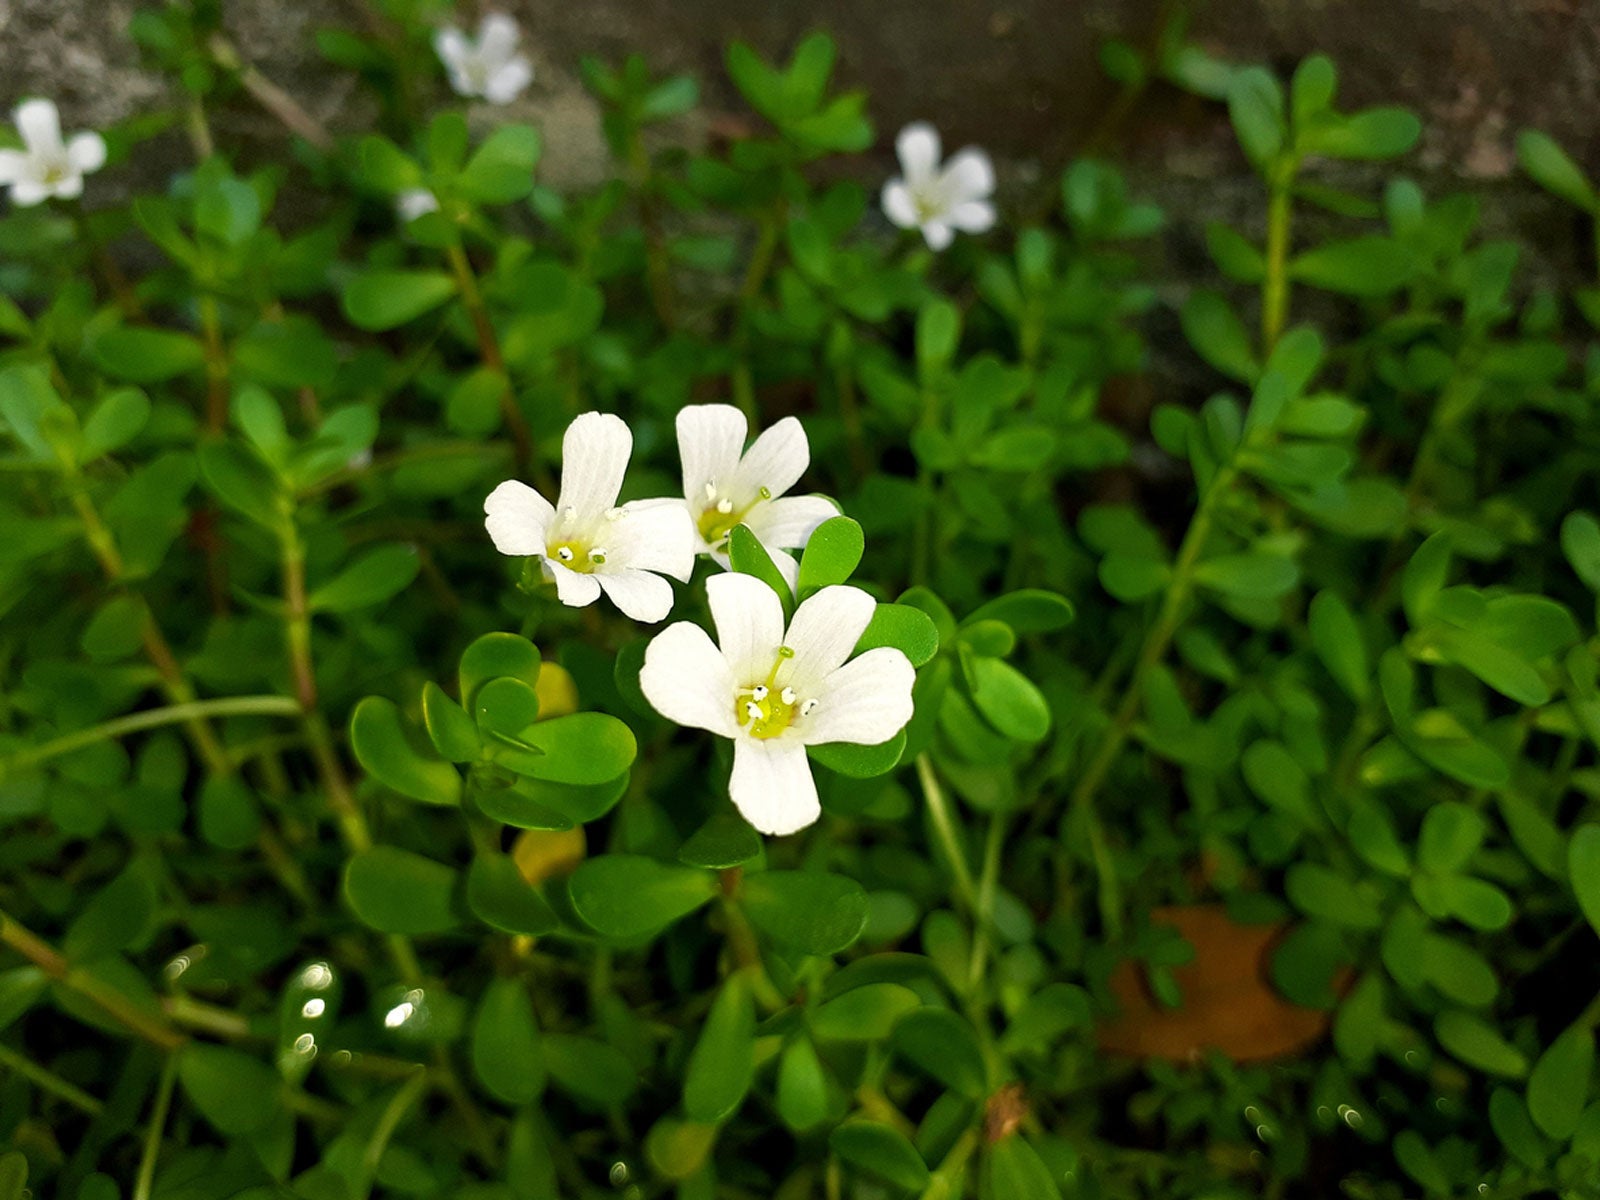 brahmi plant information - how to grow brahmi herbs in the garden